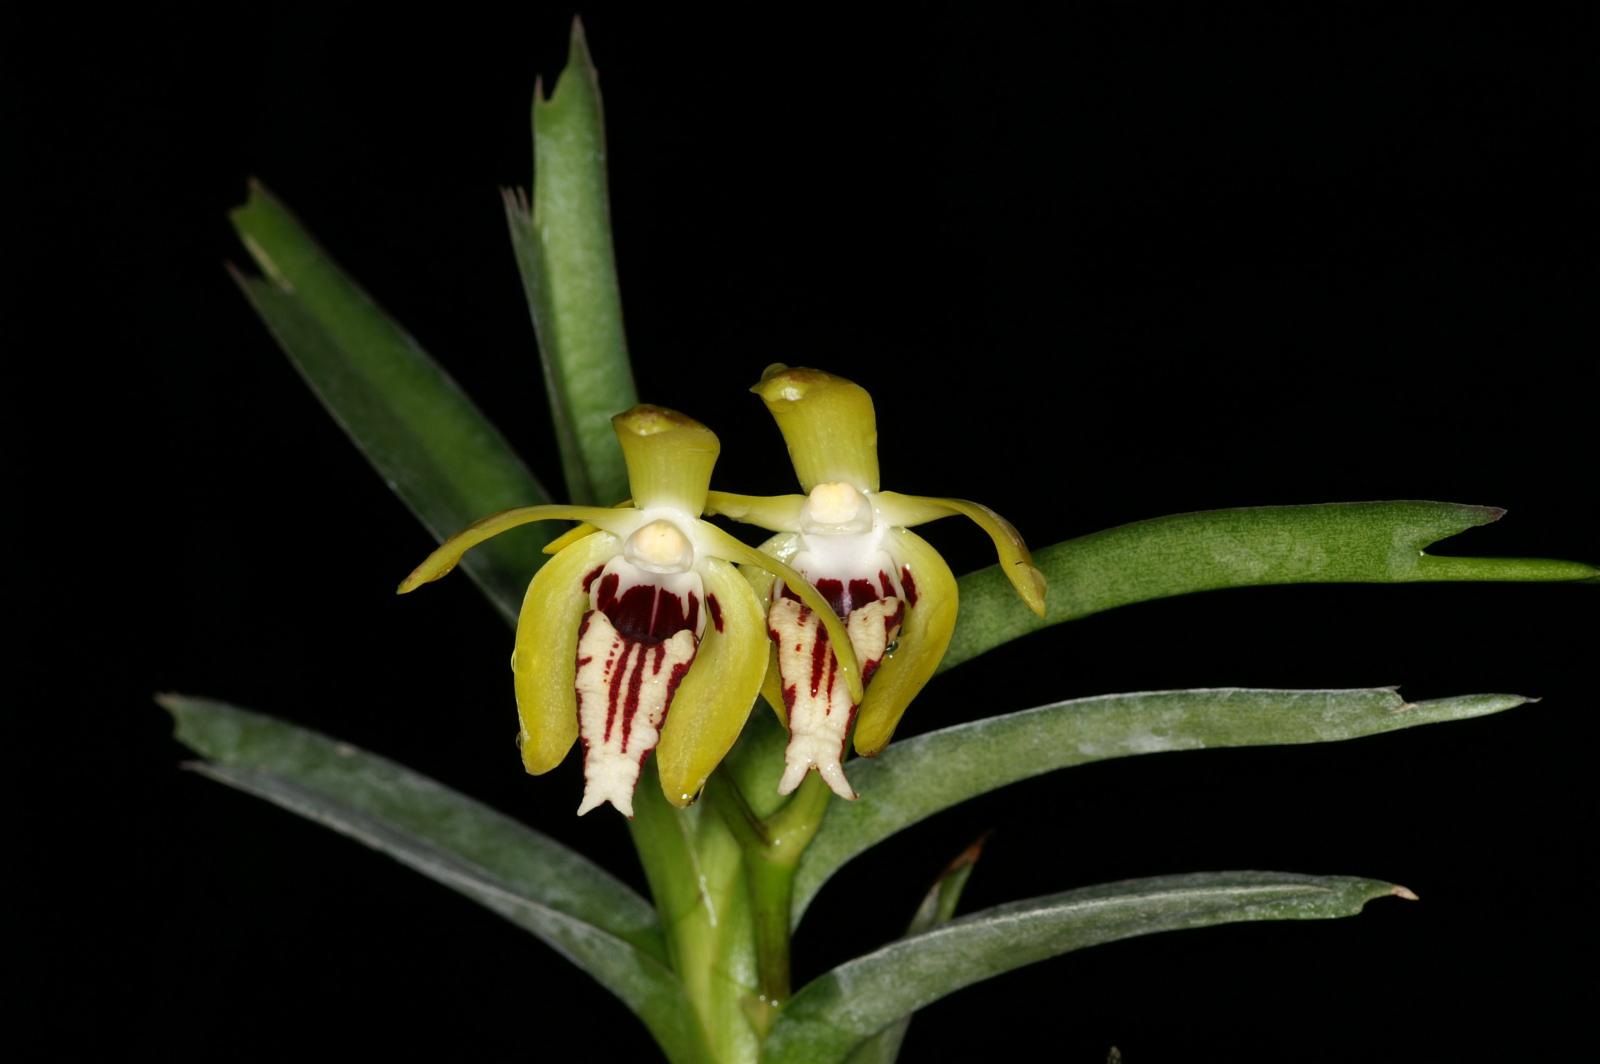 Vanda cristata orchid plant care and culture | Travaldo's blog